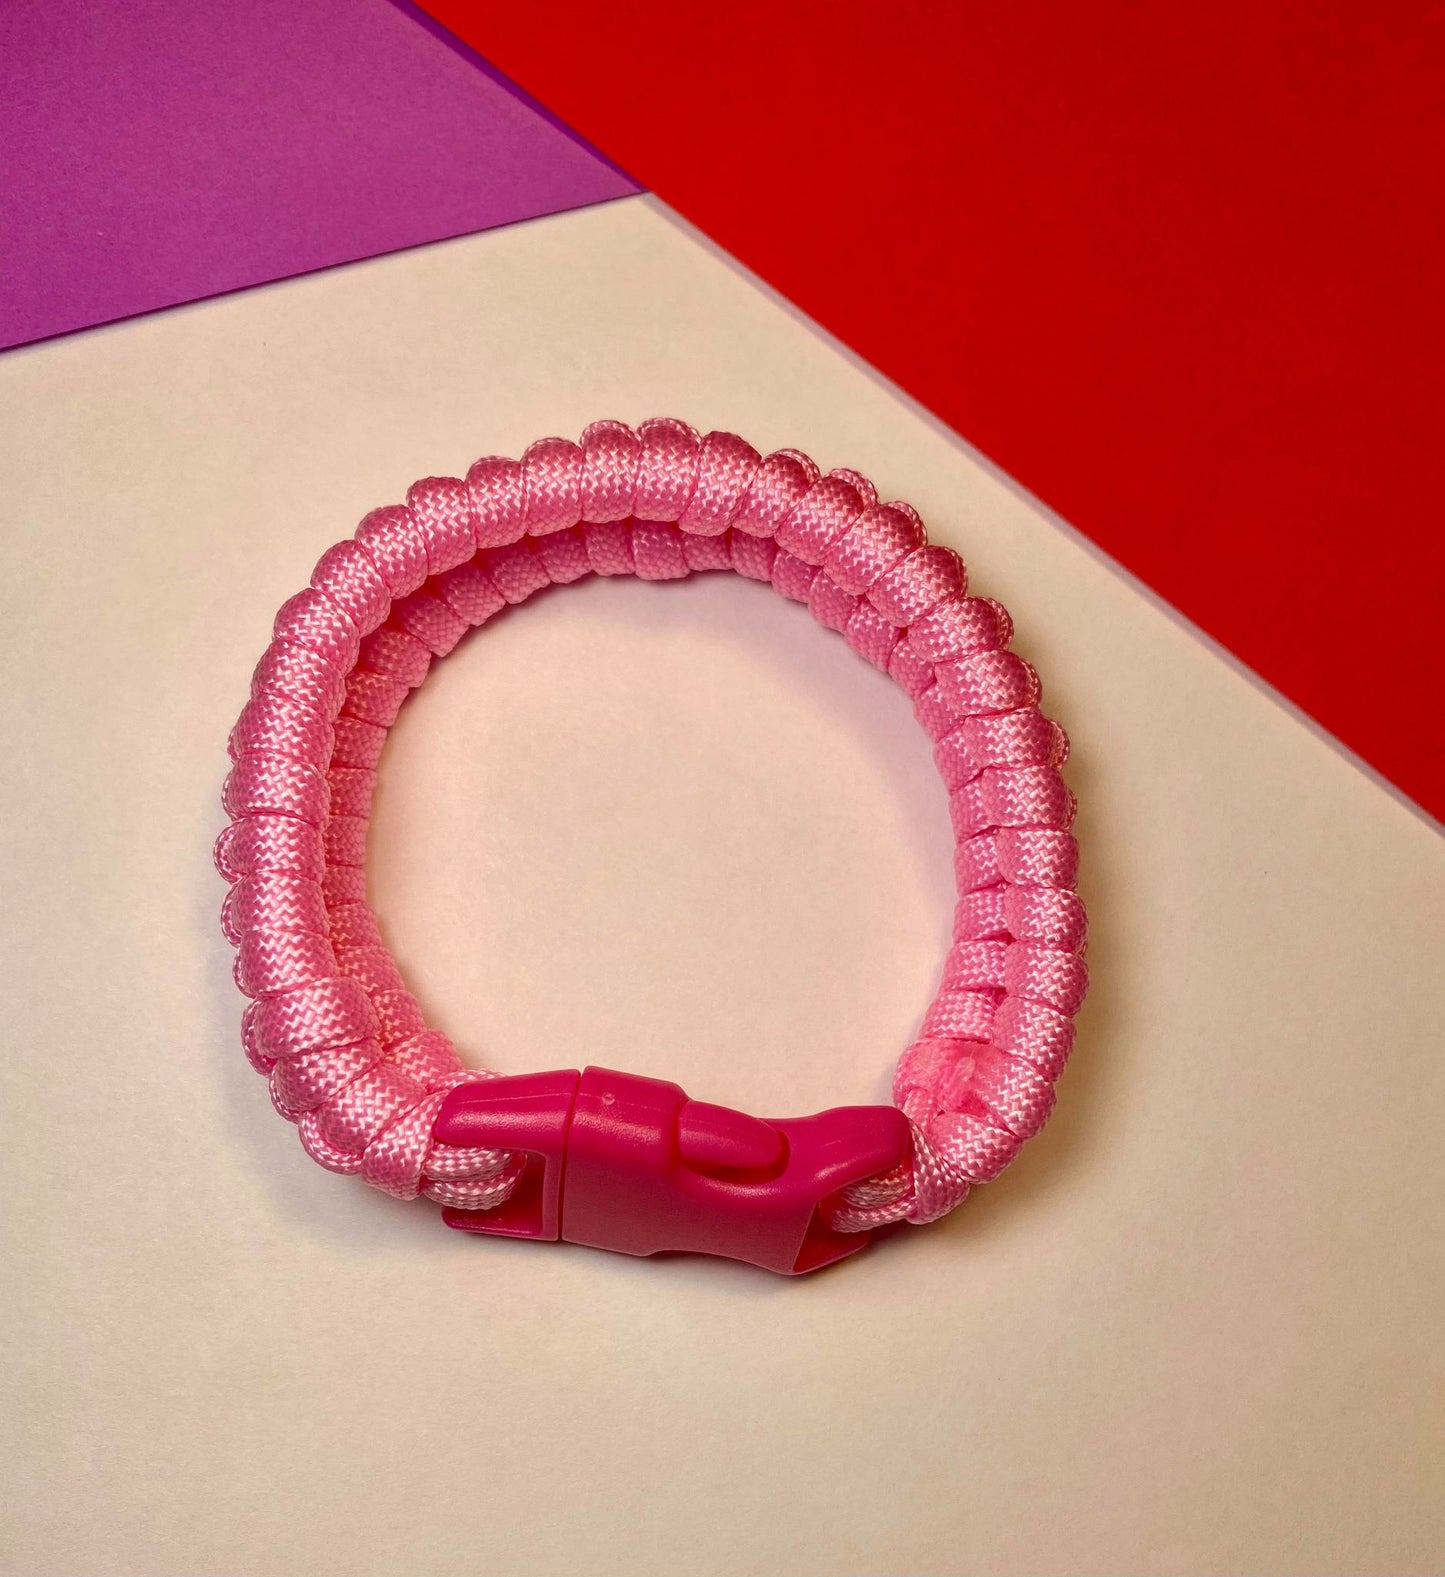 Pink Paracord Bracelet